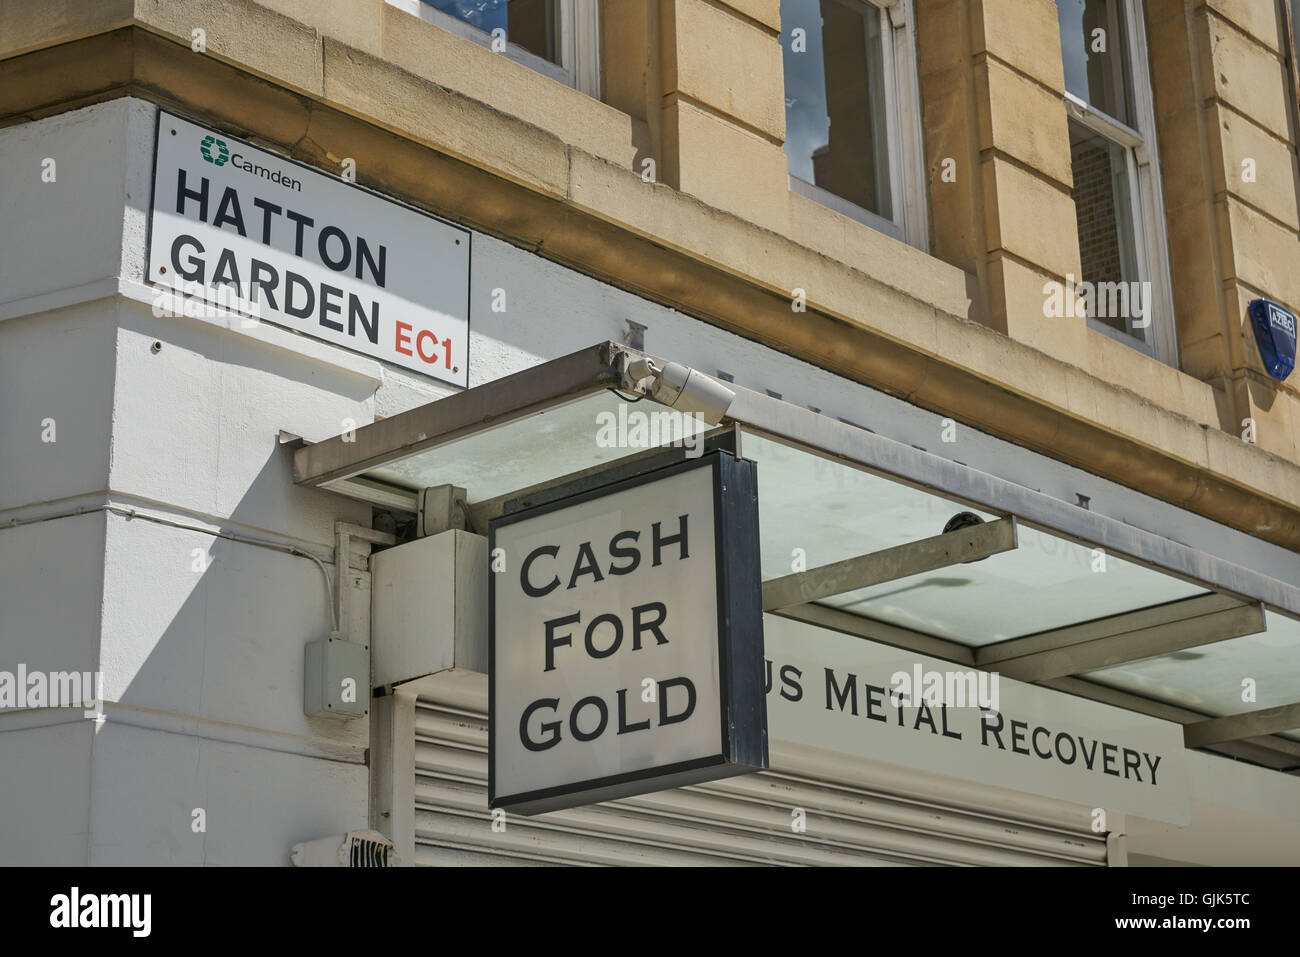 Hatton Garden London,  metal recovery, gold shop Stock Photo